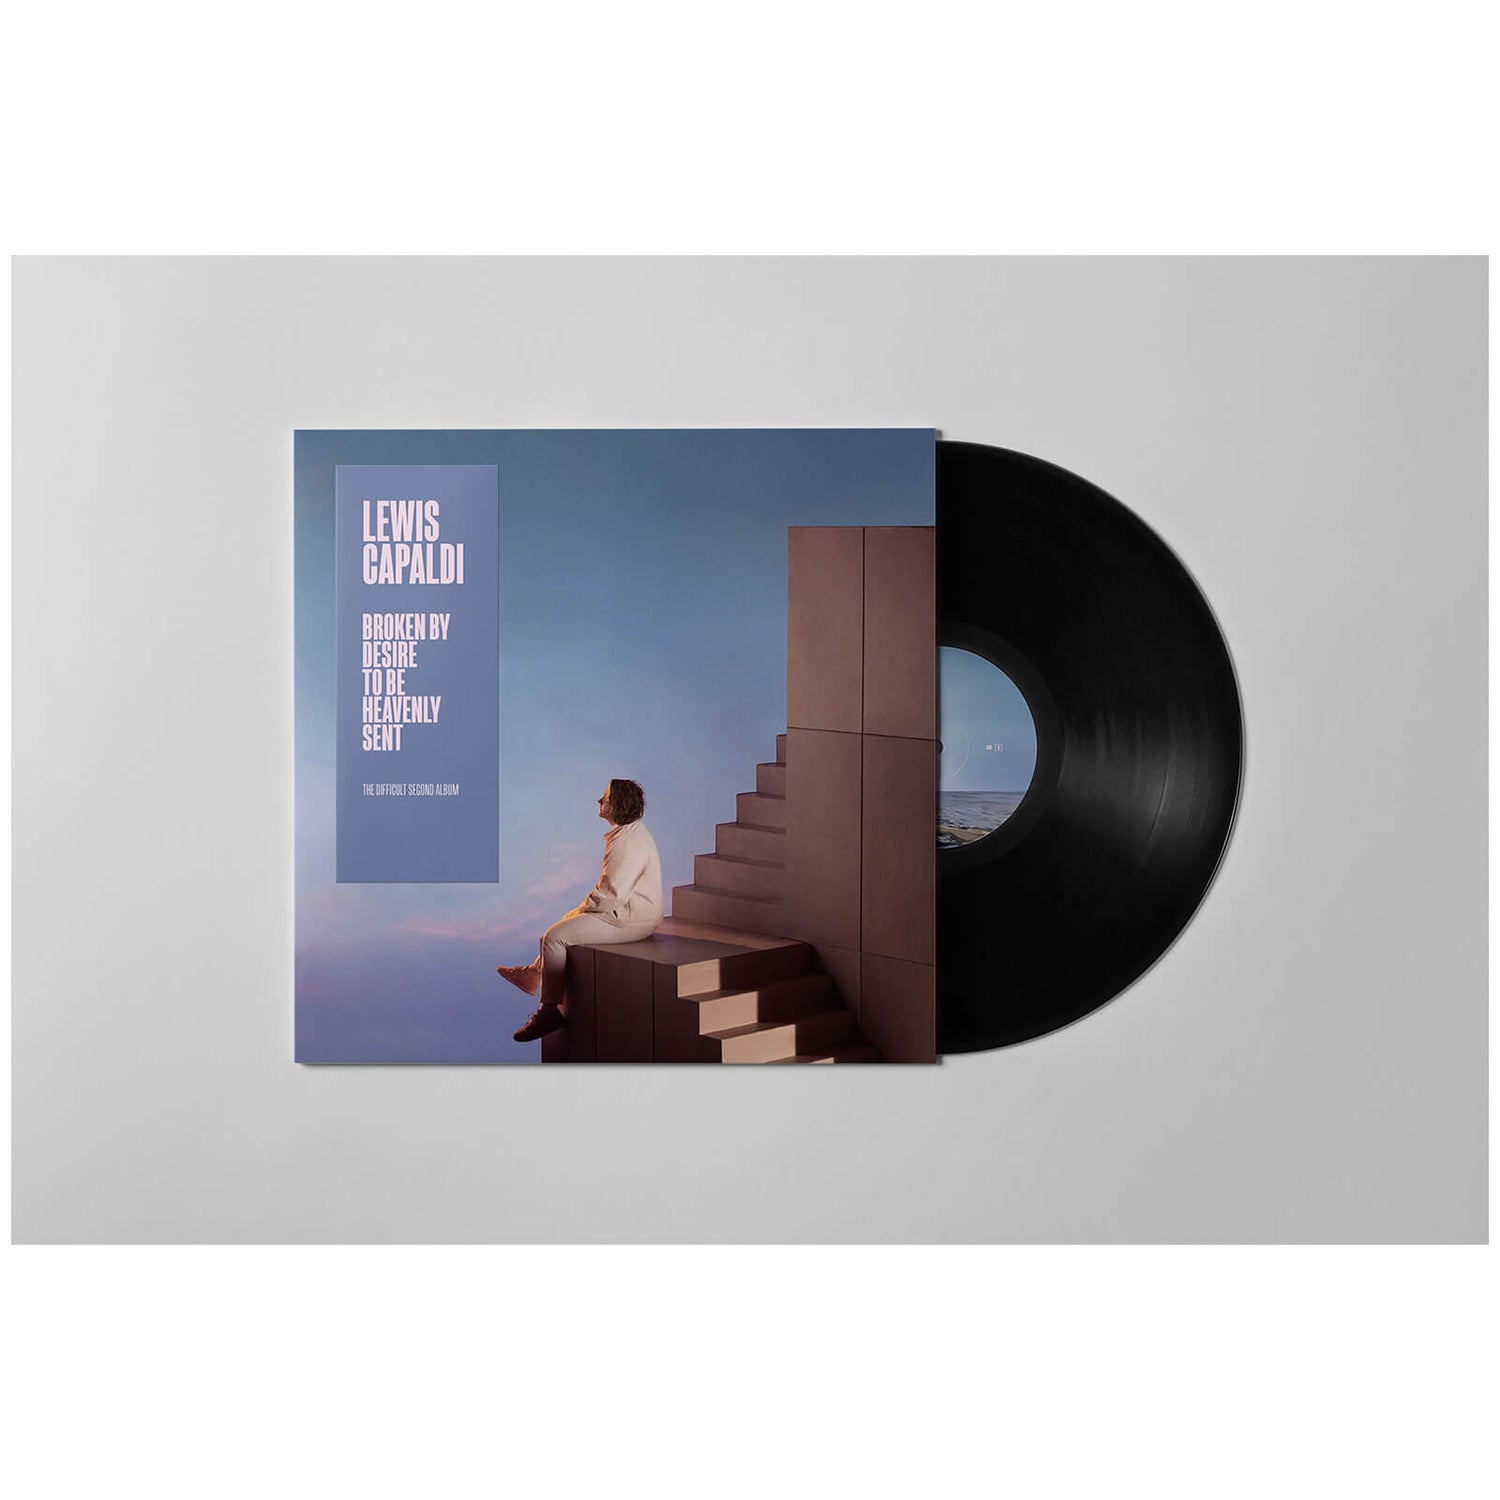 Lewis Capaldi - Broken By Desire To Be Heavenly Sent Vinyl LP